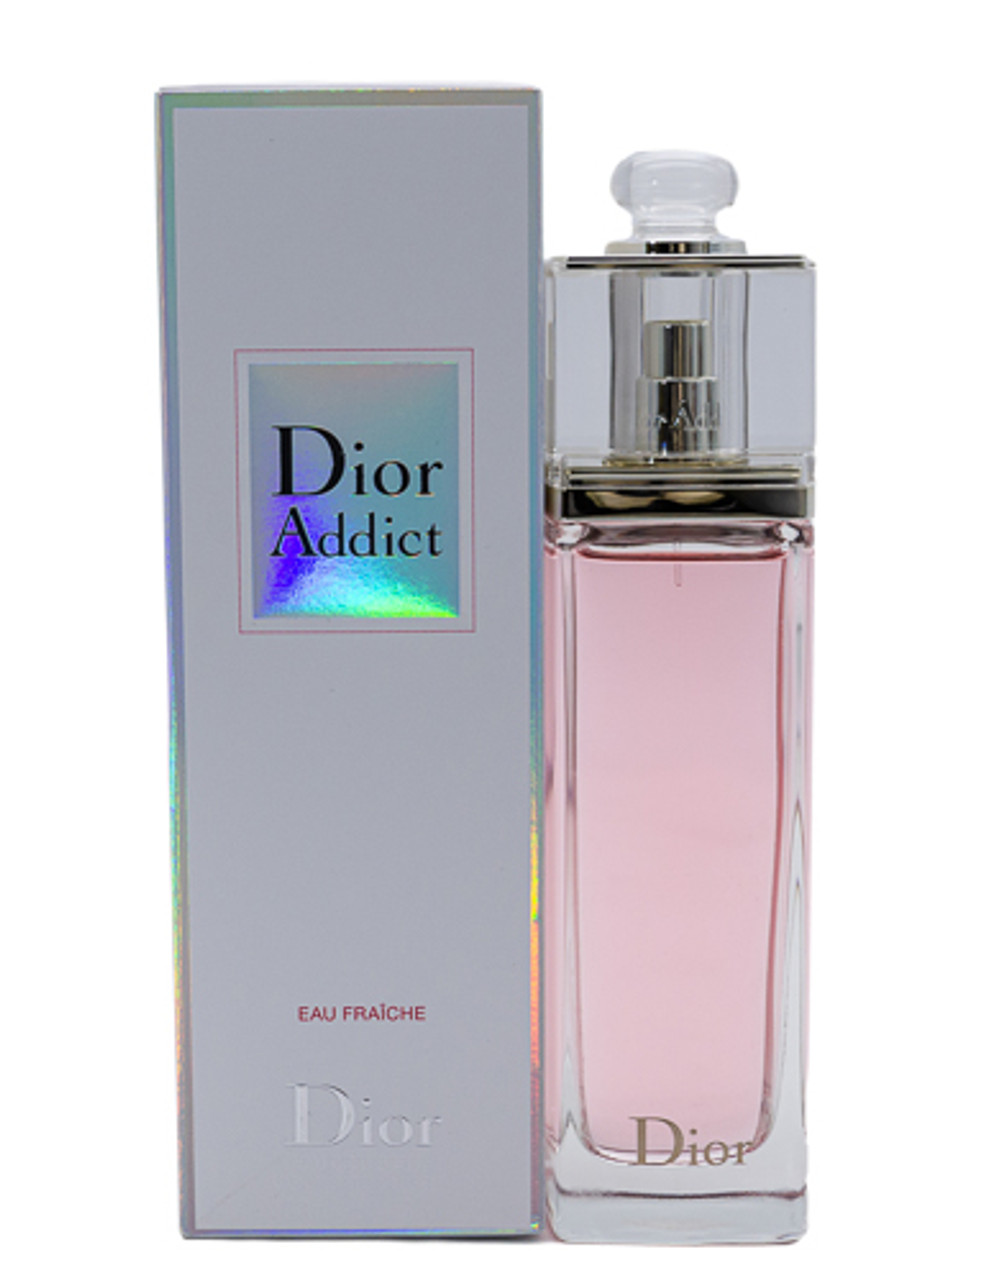 Dior Addict eau fraiche by Christian Dior 3.4 oz EDT for women